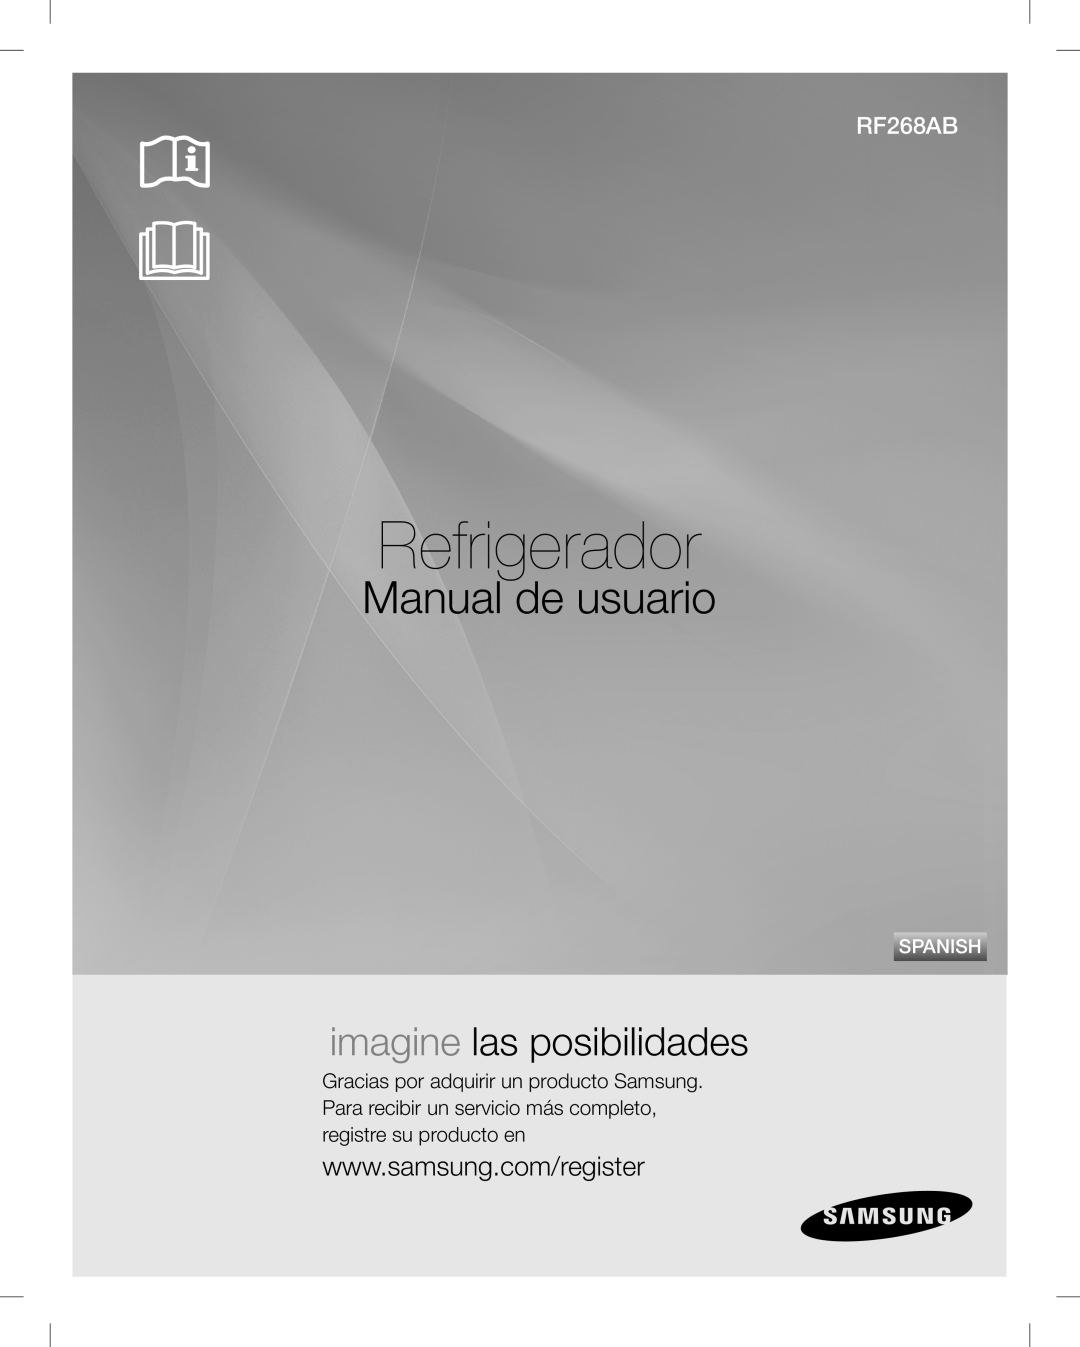 Samsung RF268AB user manual Refrigerador, Manual de usuario, imagine las posibilidades, Spanish 